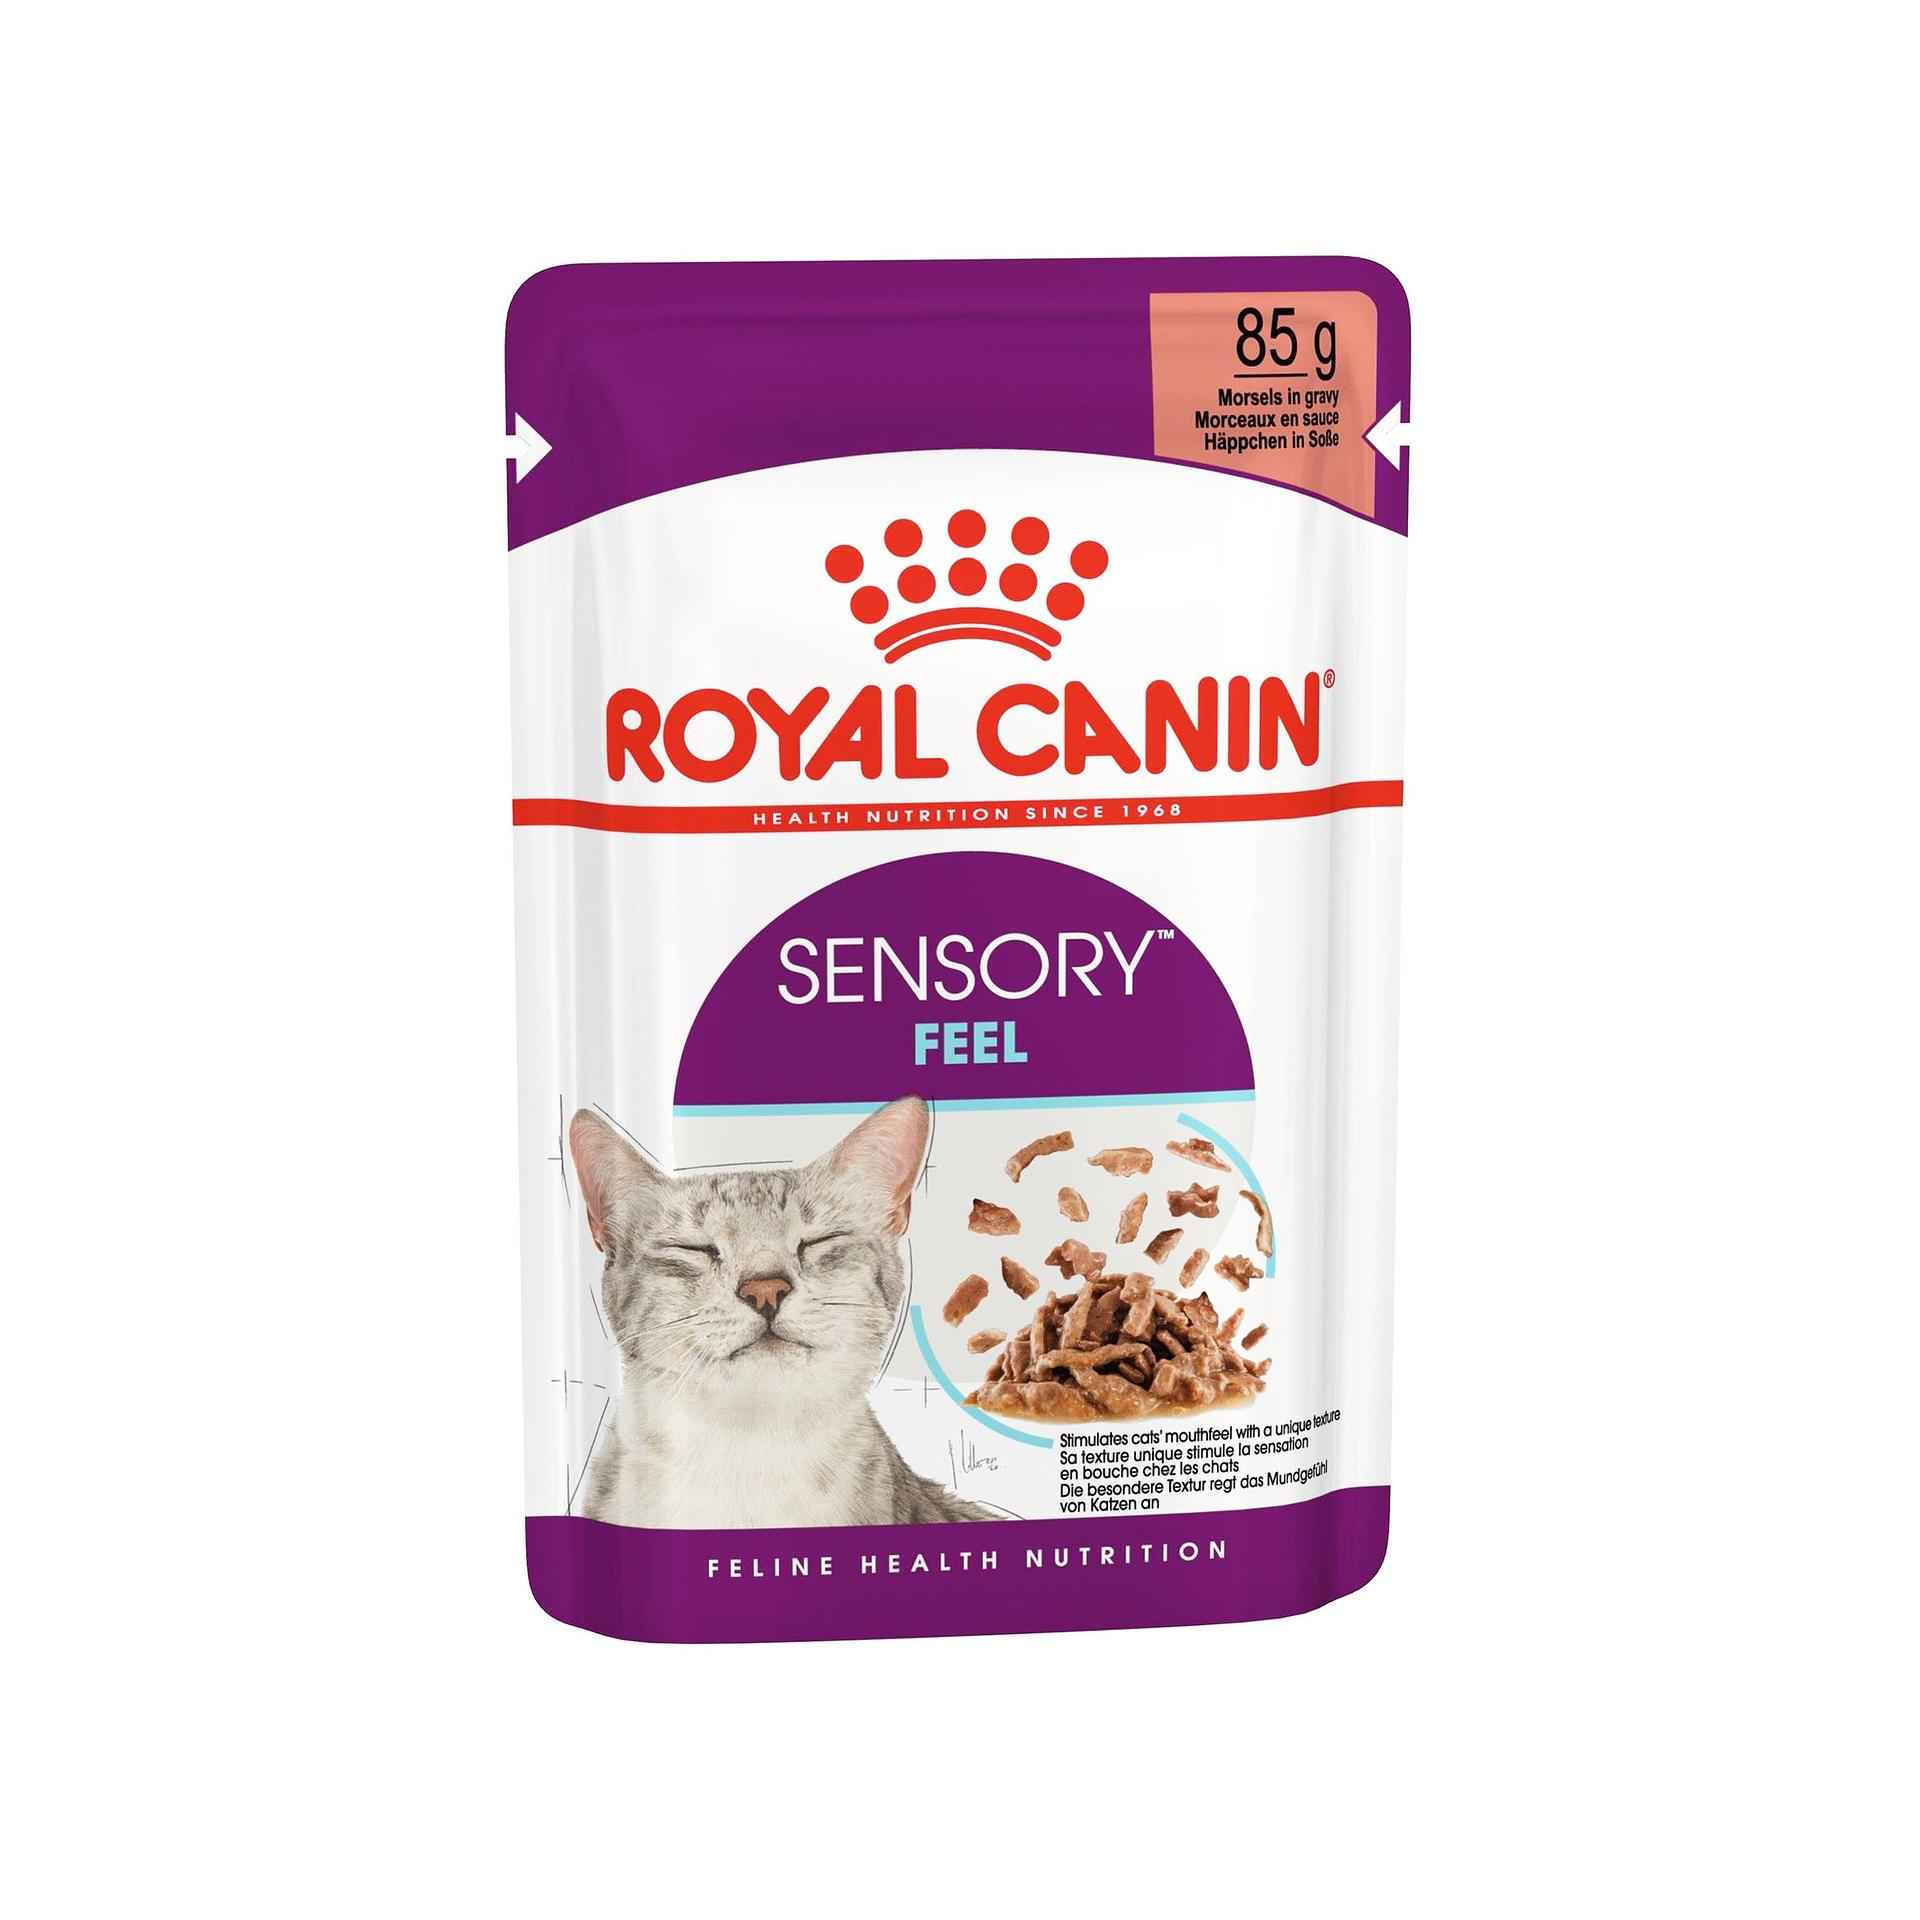 Royal Canin Sensory Feel, 12x85g